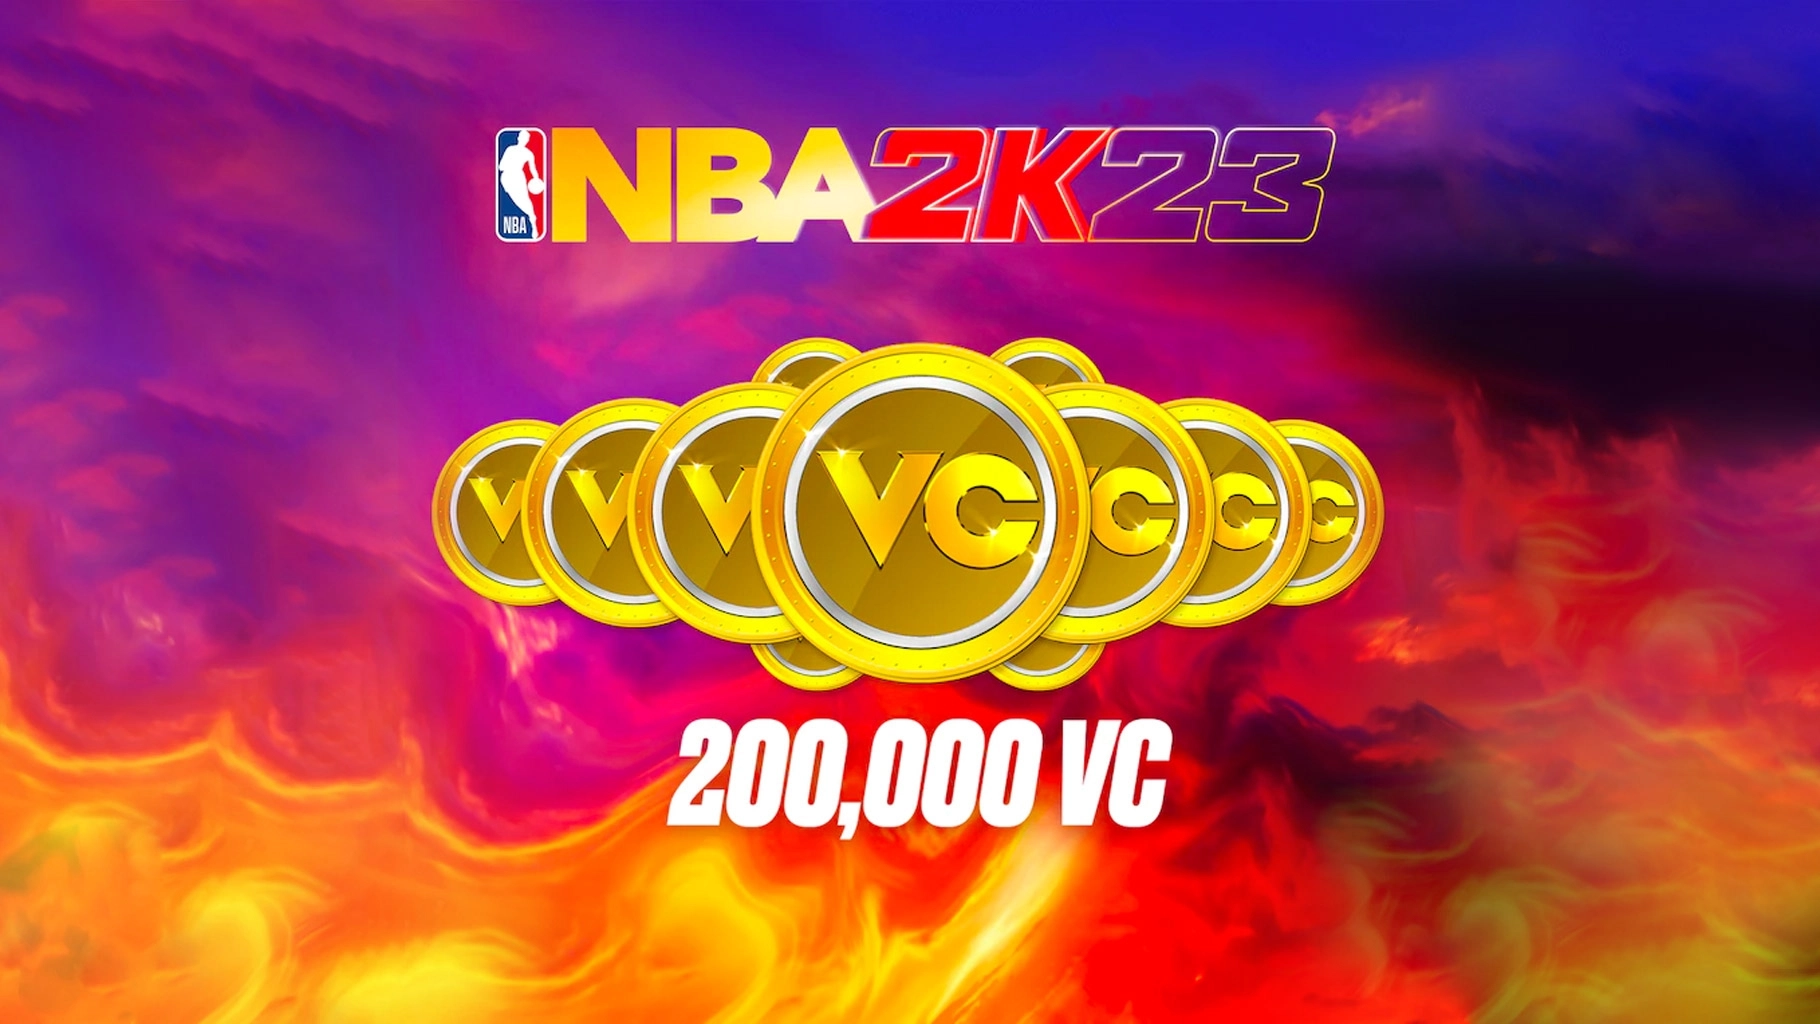 NBA 2K23 - 200,000 VC - Xbox Series X/S/Xbox One